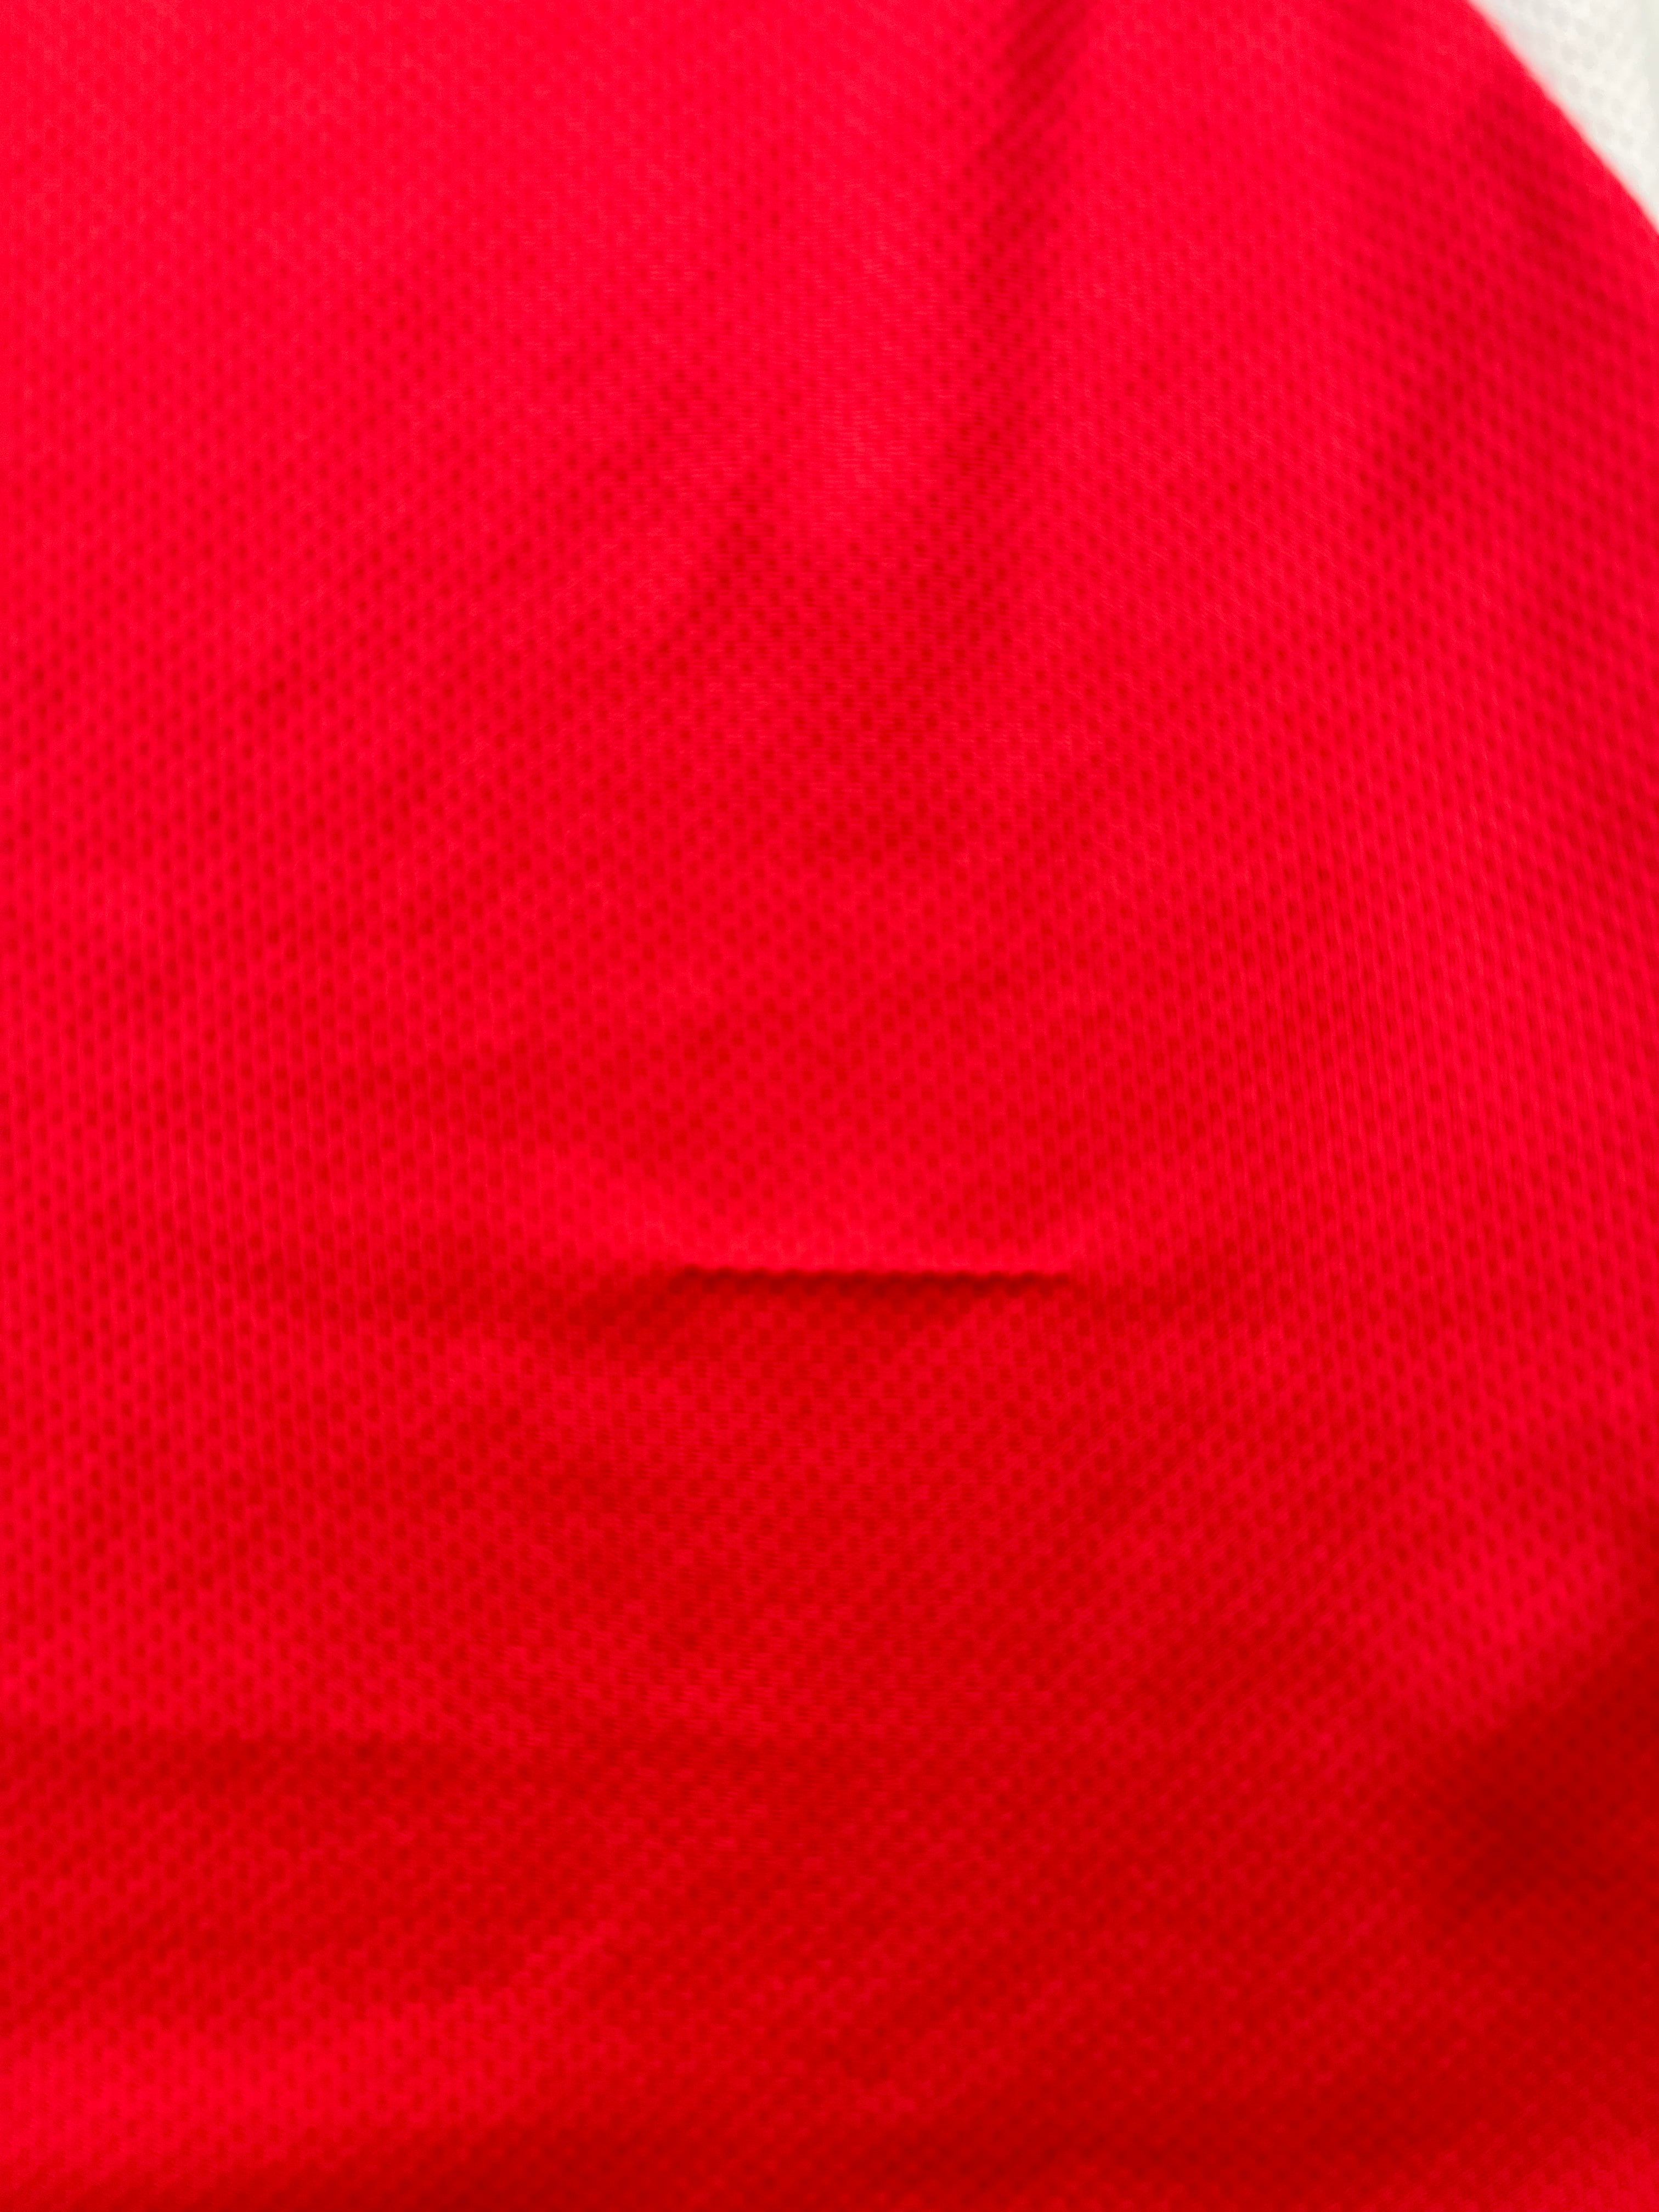 2002/04 Camiseta básica visitante de Túnez (L) 8.5/10 